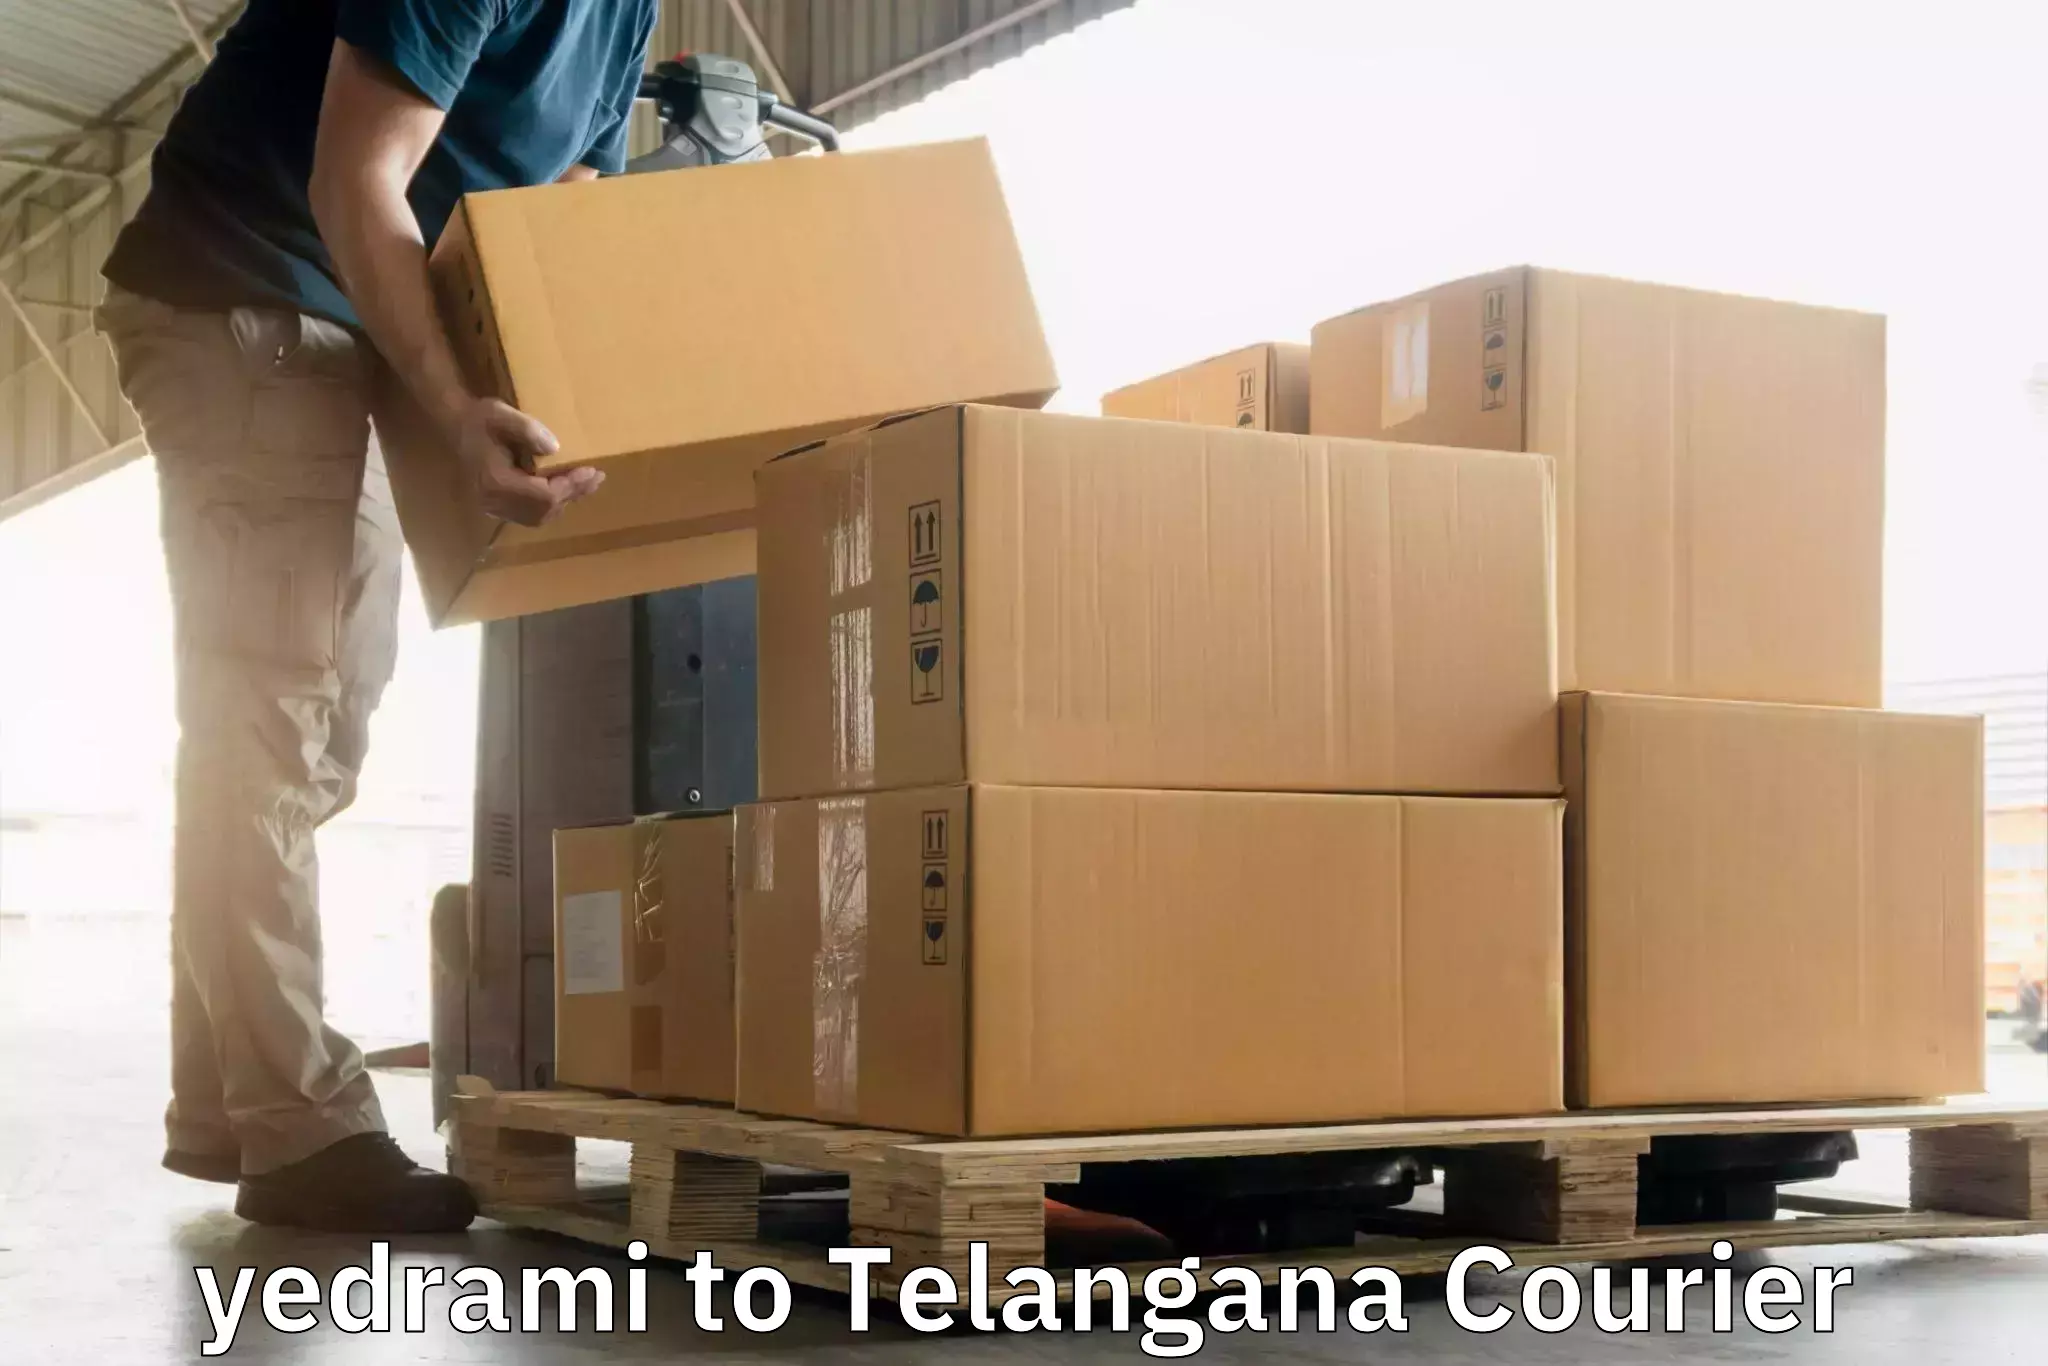 International parcel service yedrami to Danthalapally